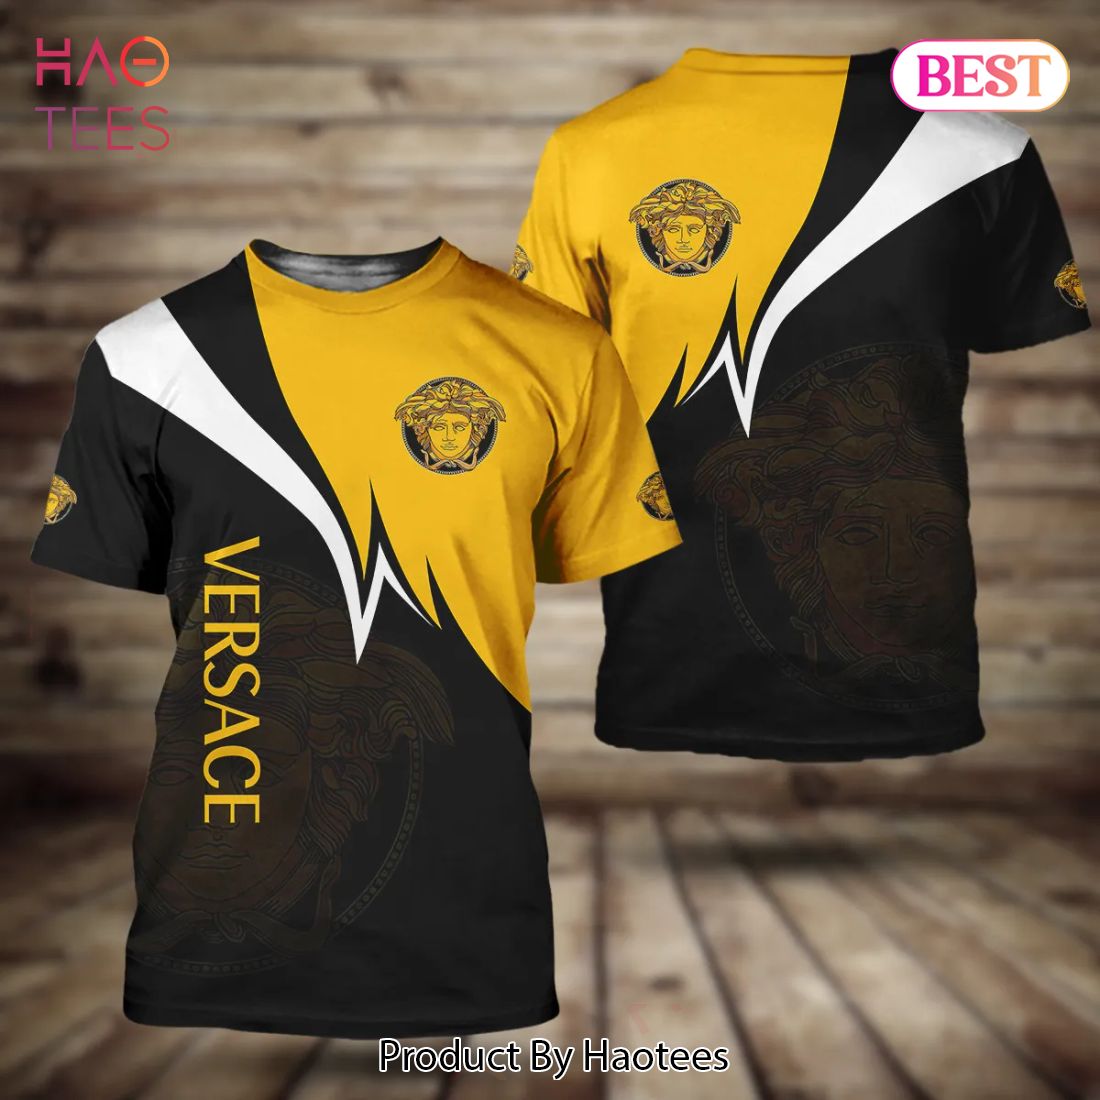 [NEW FASHION] Versace Medusa Yellow Black Luxury Brand Premium T-Shirt Outfit For Men Women